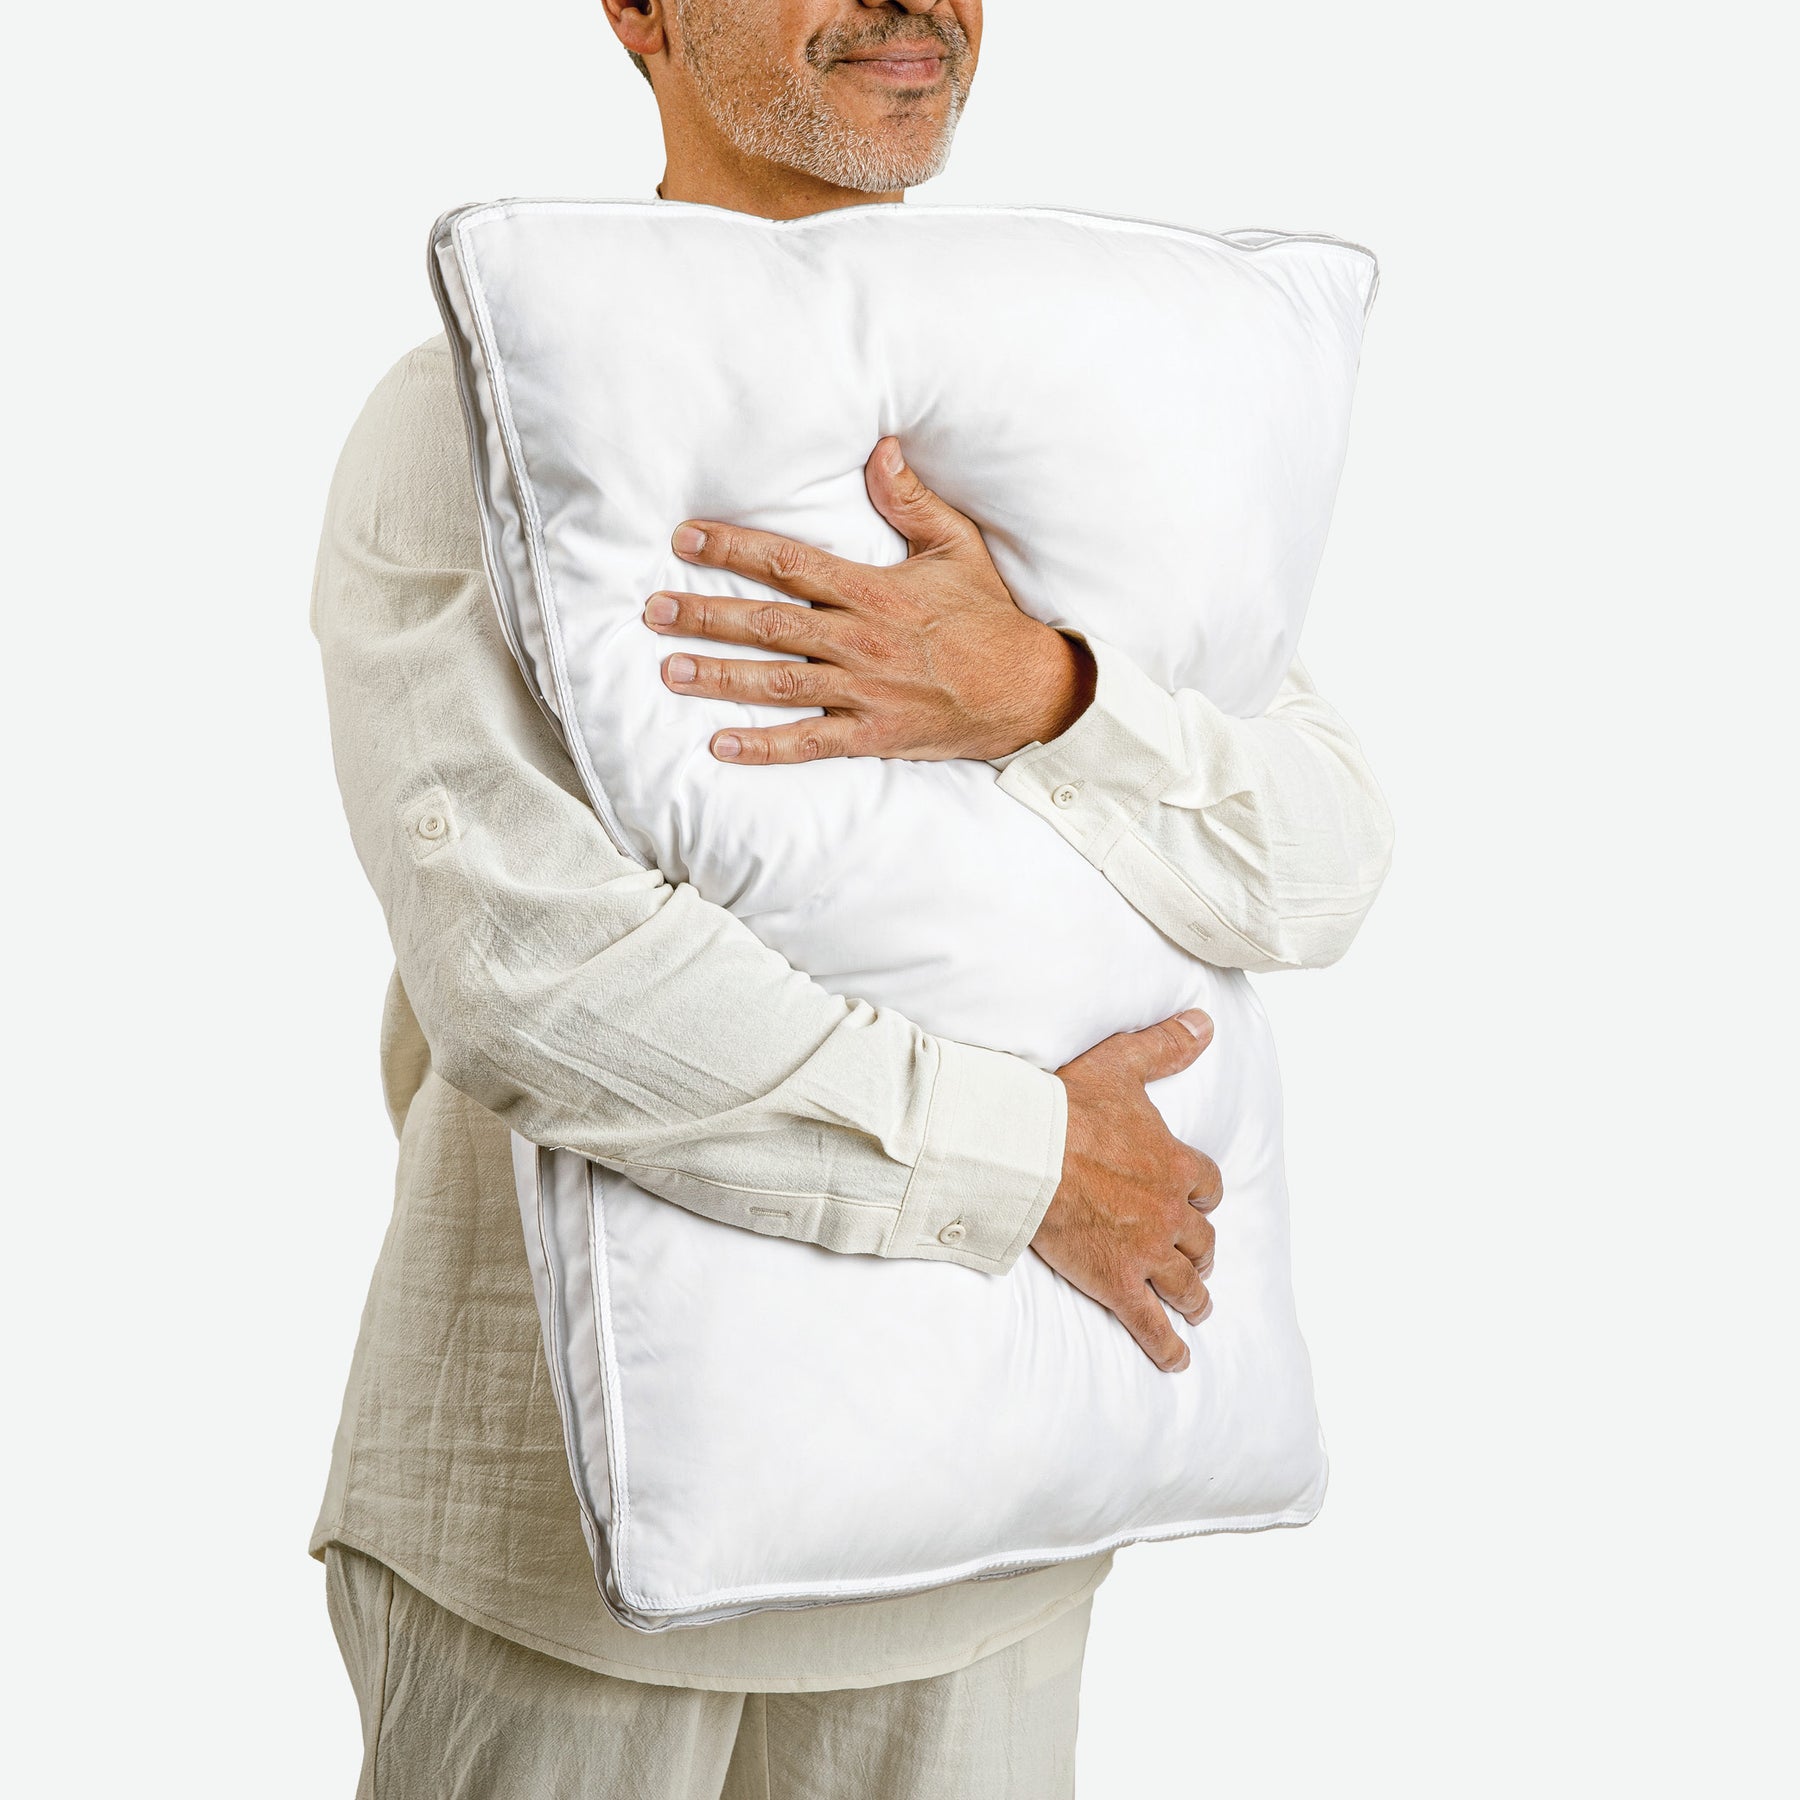 Cooling Fiber Pillow